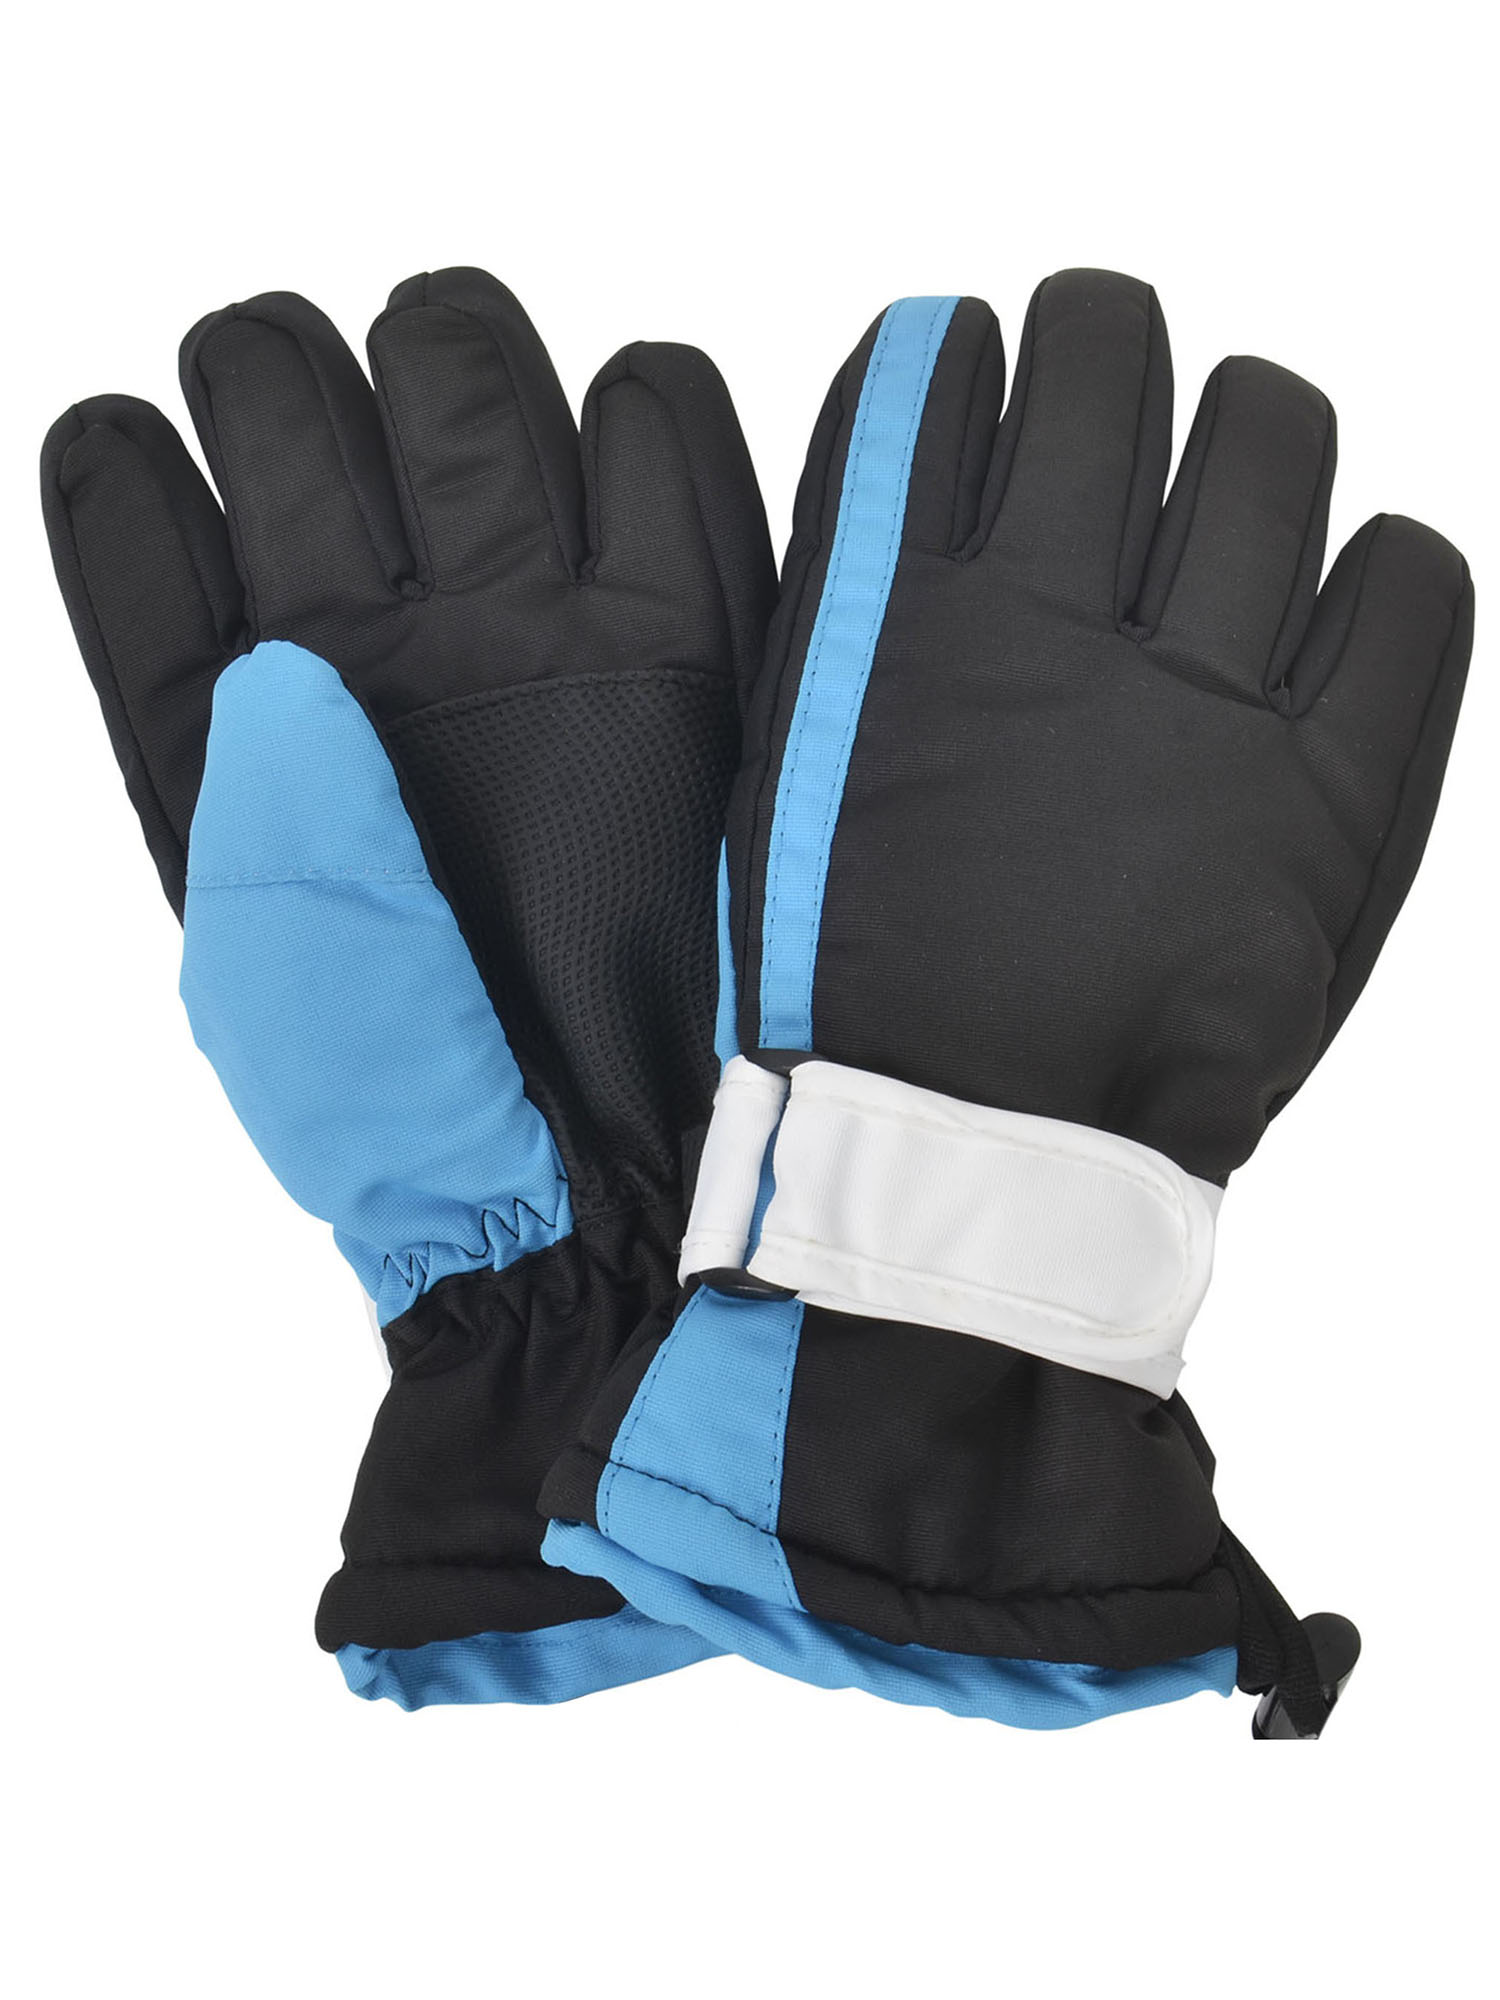 Simplicity Boys Kids Waterproof Thinsulate Colorblocked Snow Ski Gloves, M - image 1 of 4